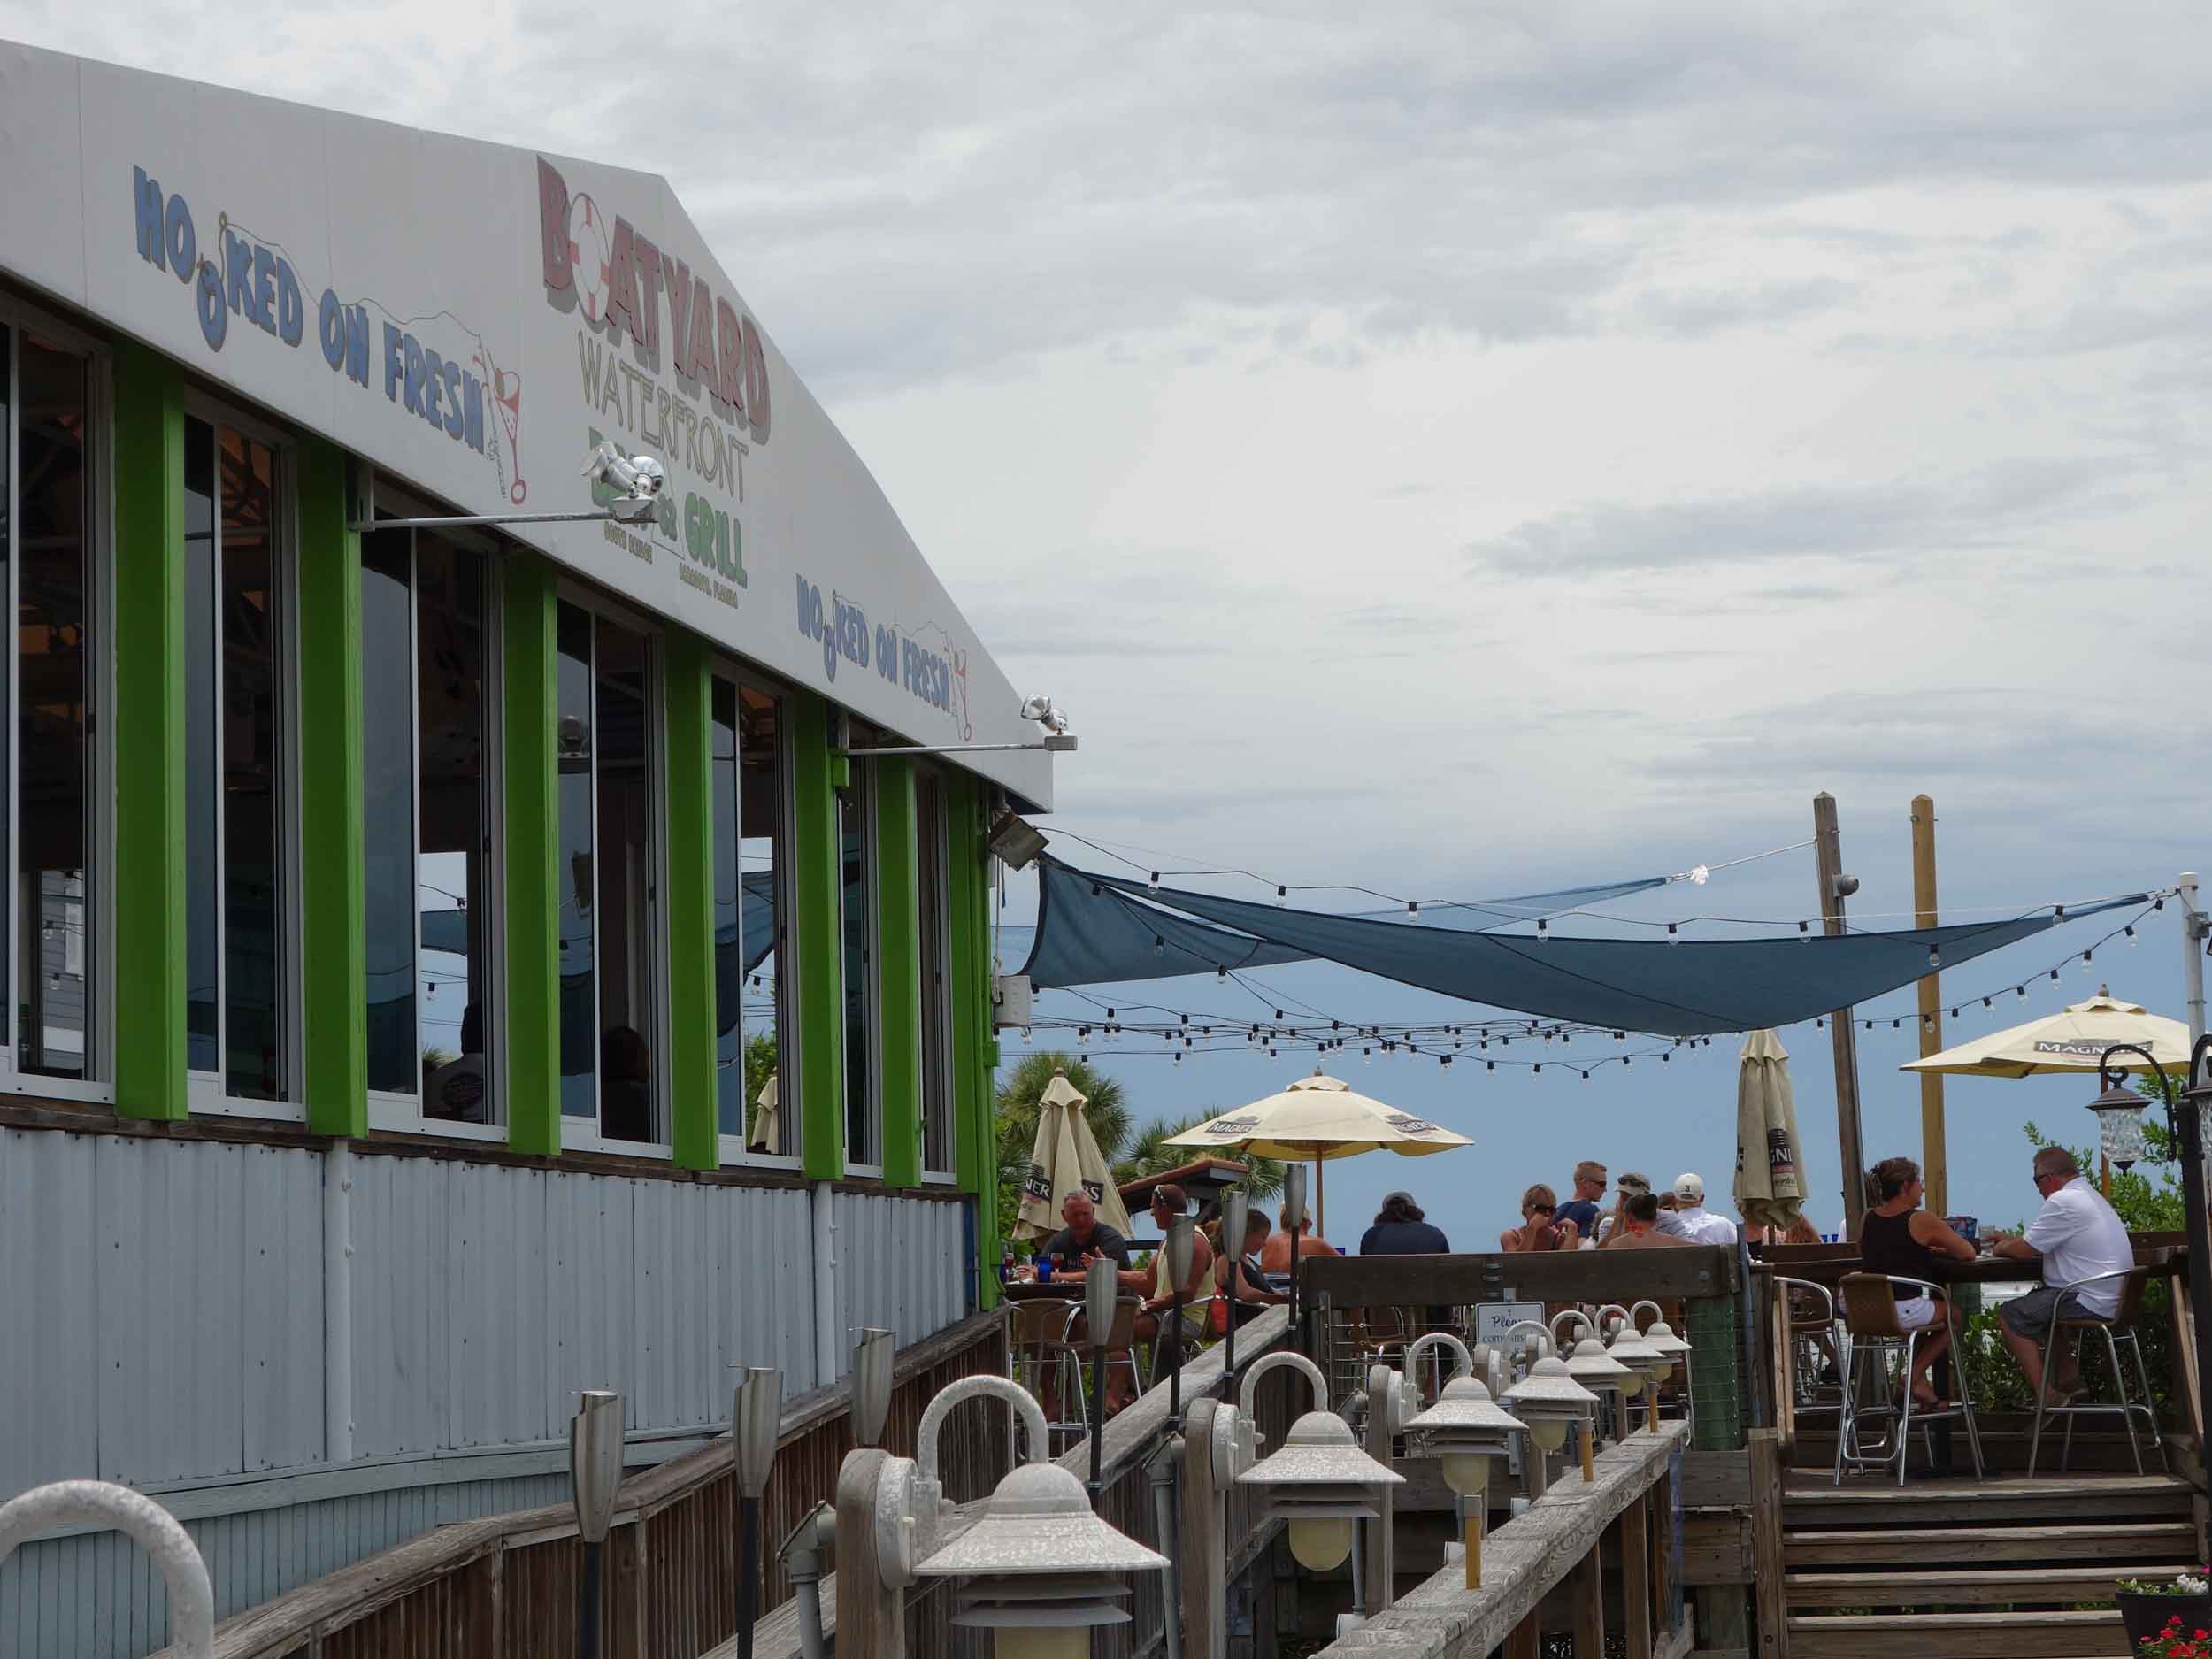 Boatyard Waterfront Bar and Grill Patio